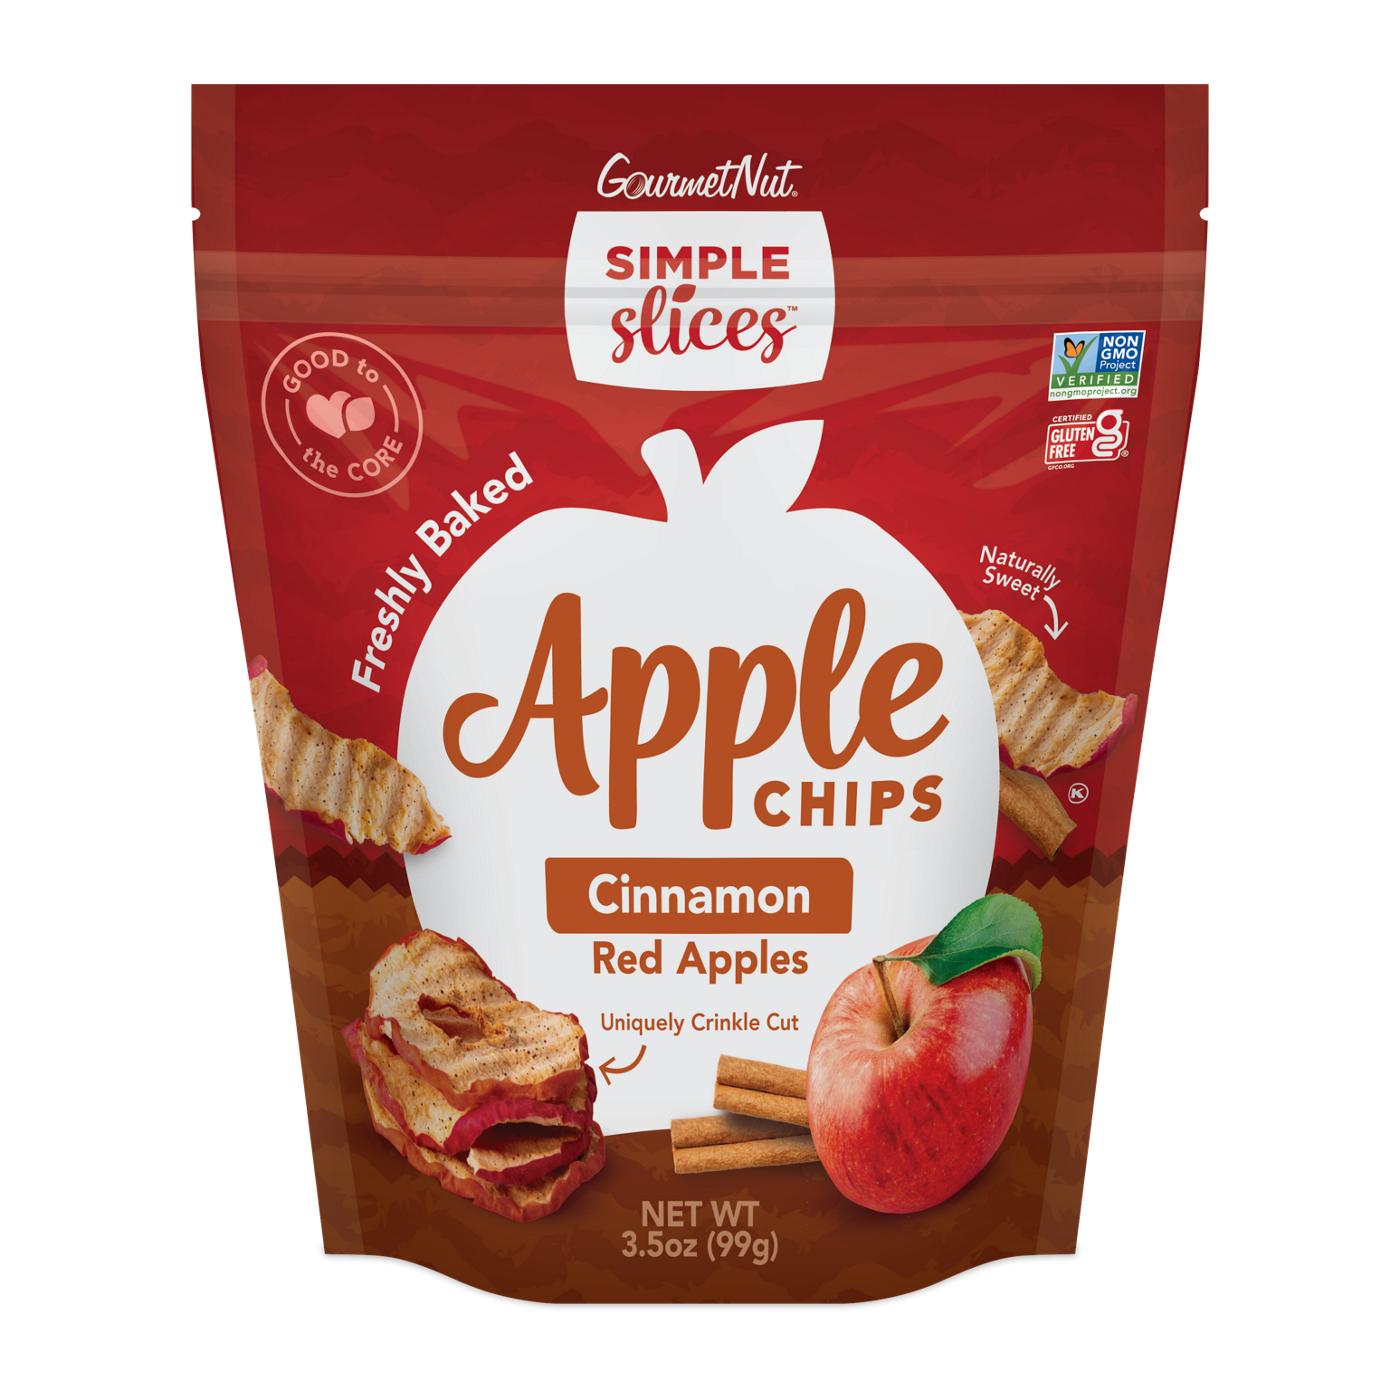 Gourmet Nut Simple Slices Apple Chips Cinnamon Red Apples; image 1 of 2